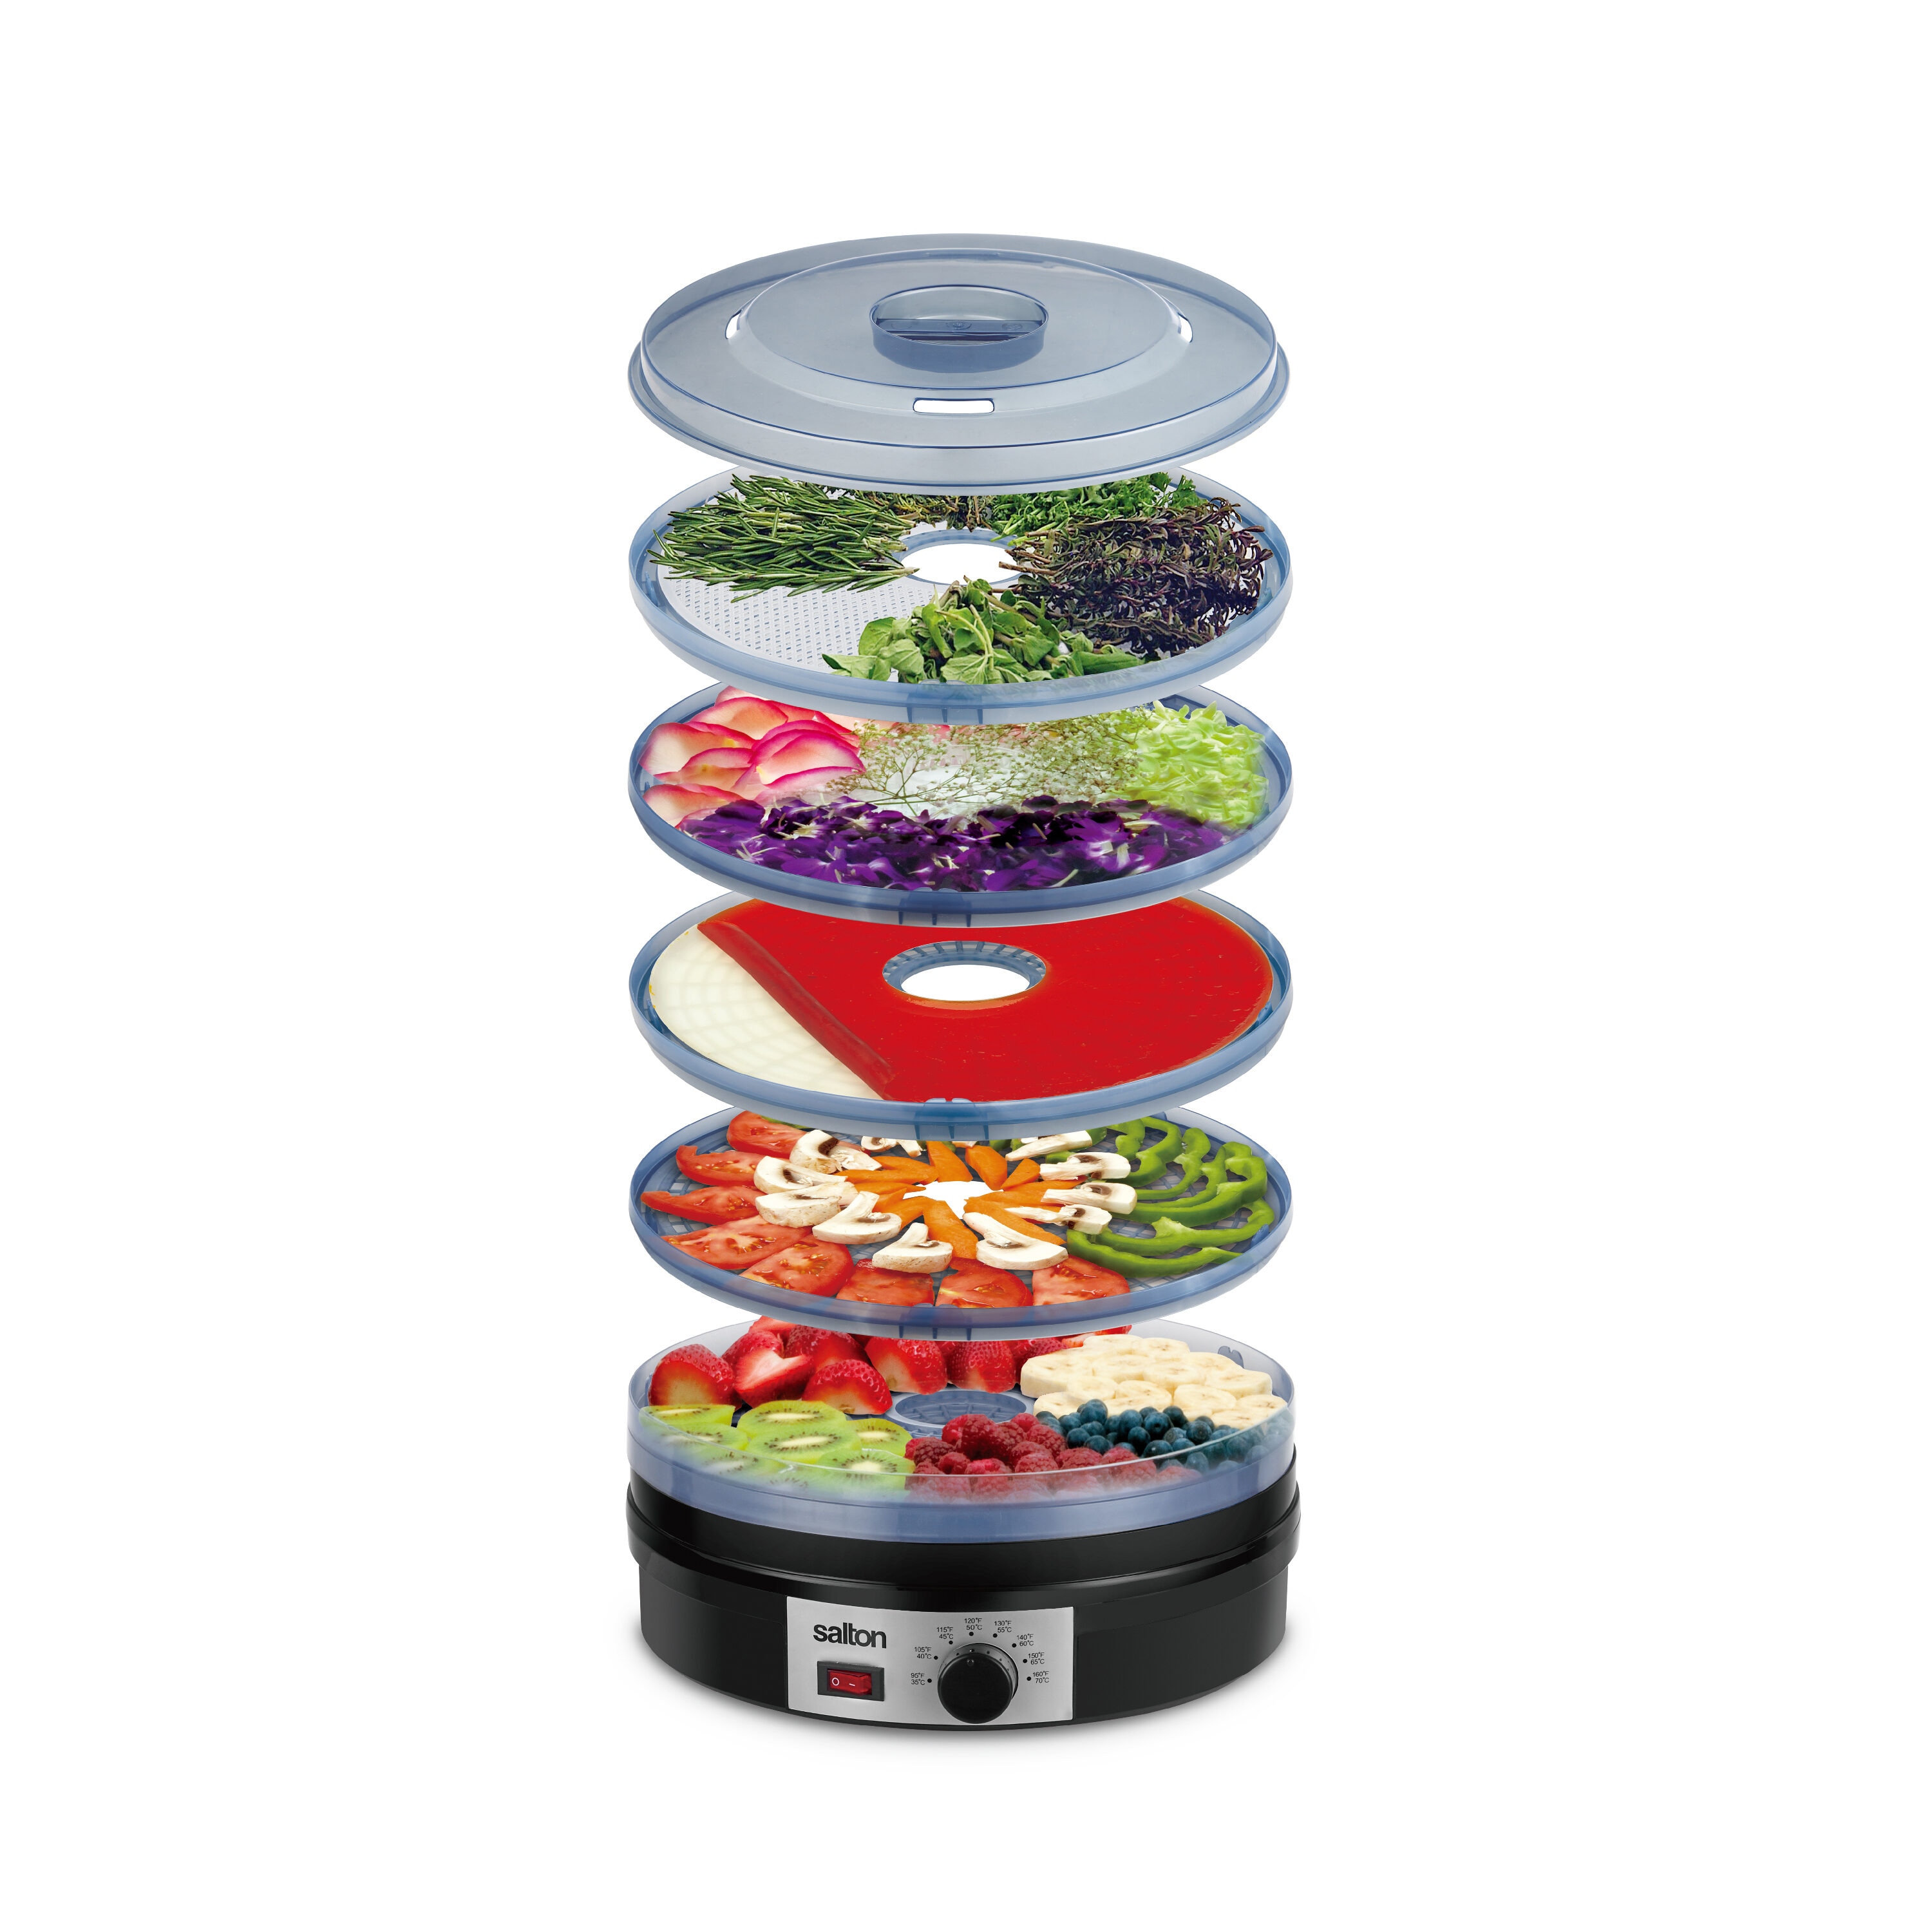 Cuisinart processor/blender Nesco jerky/food dehydrator Chefman airfryer -  household items - by owner - housewares